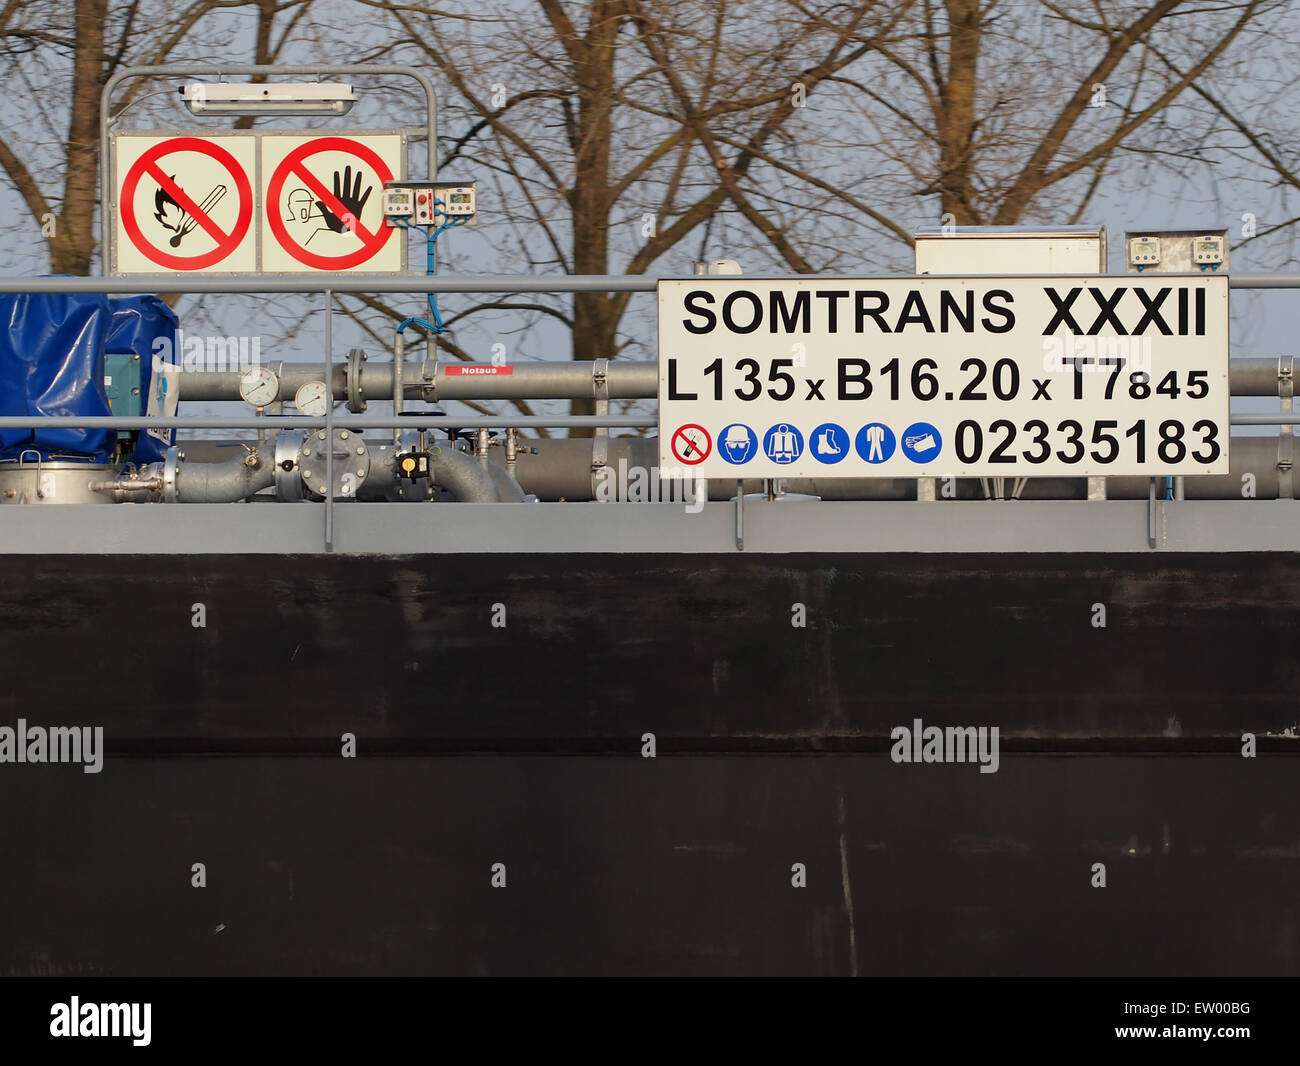 Somtrans XXXII - ENI 02335183, Amsterdam-Rijnkanaal, pic4 Foto Stock